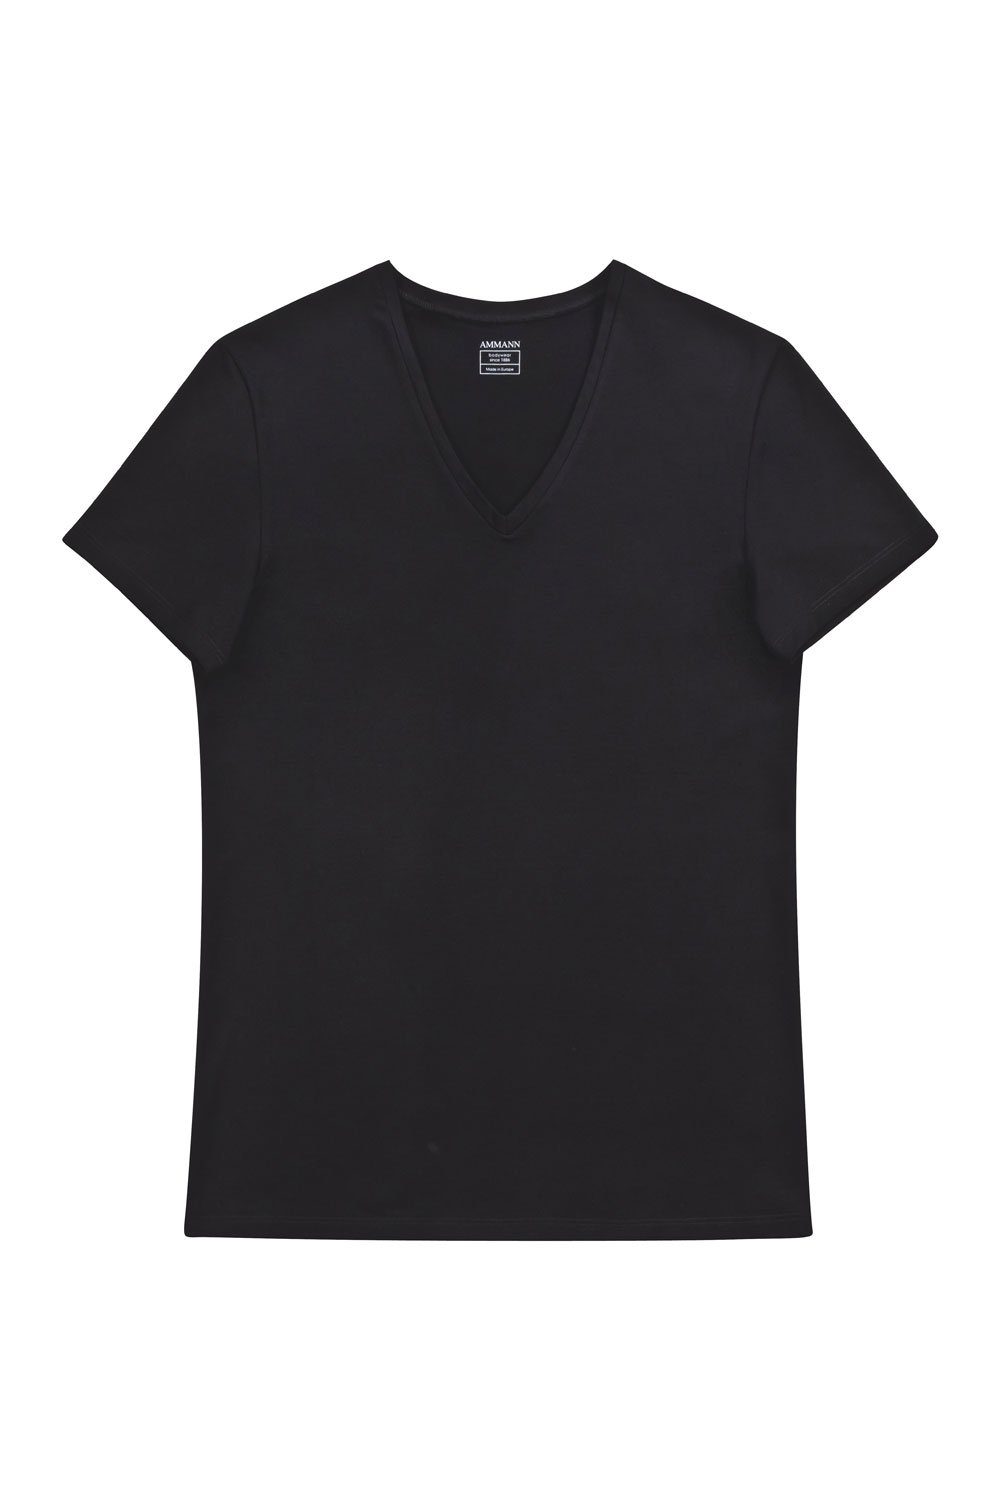 Ammann Kurzarmshirt V-Shirt Bio-Baumwolle 11466 schwarz